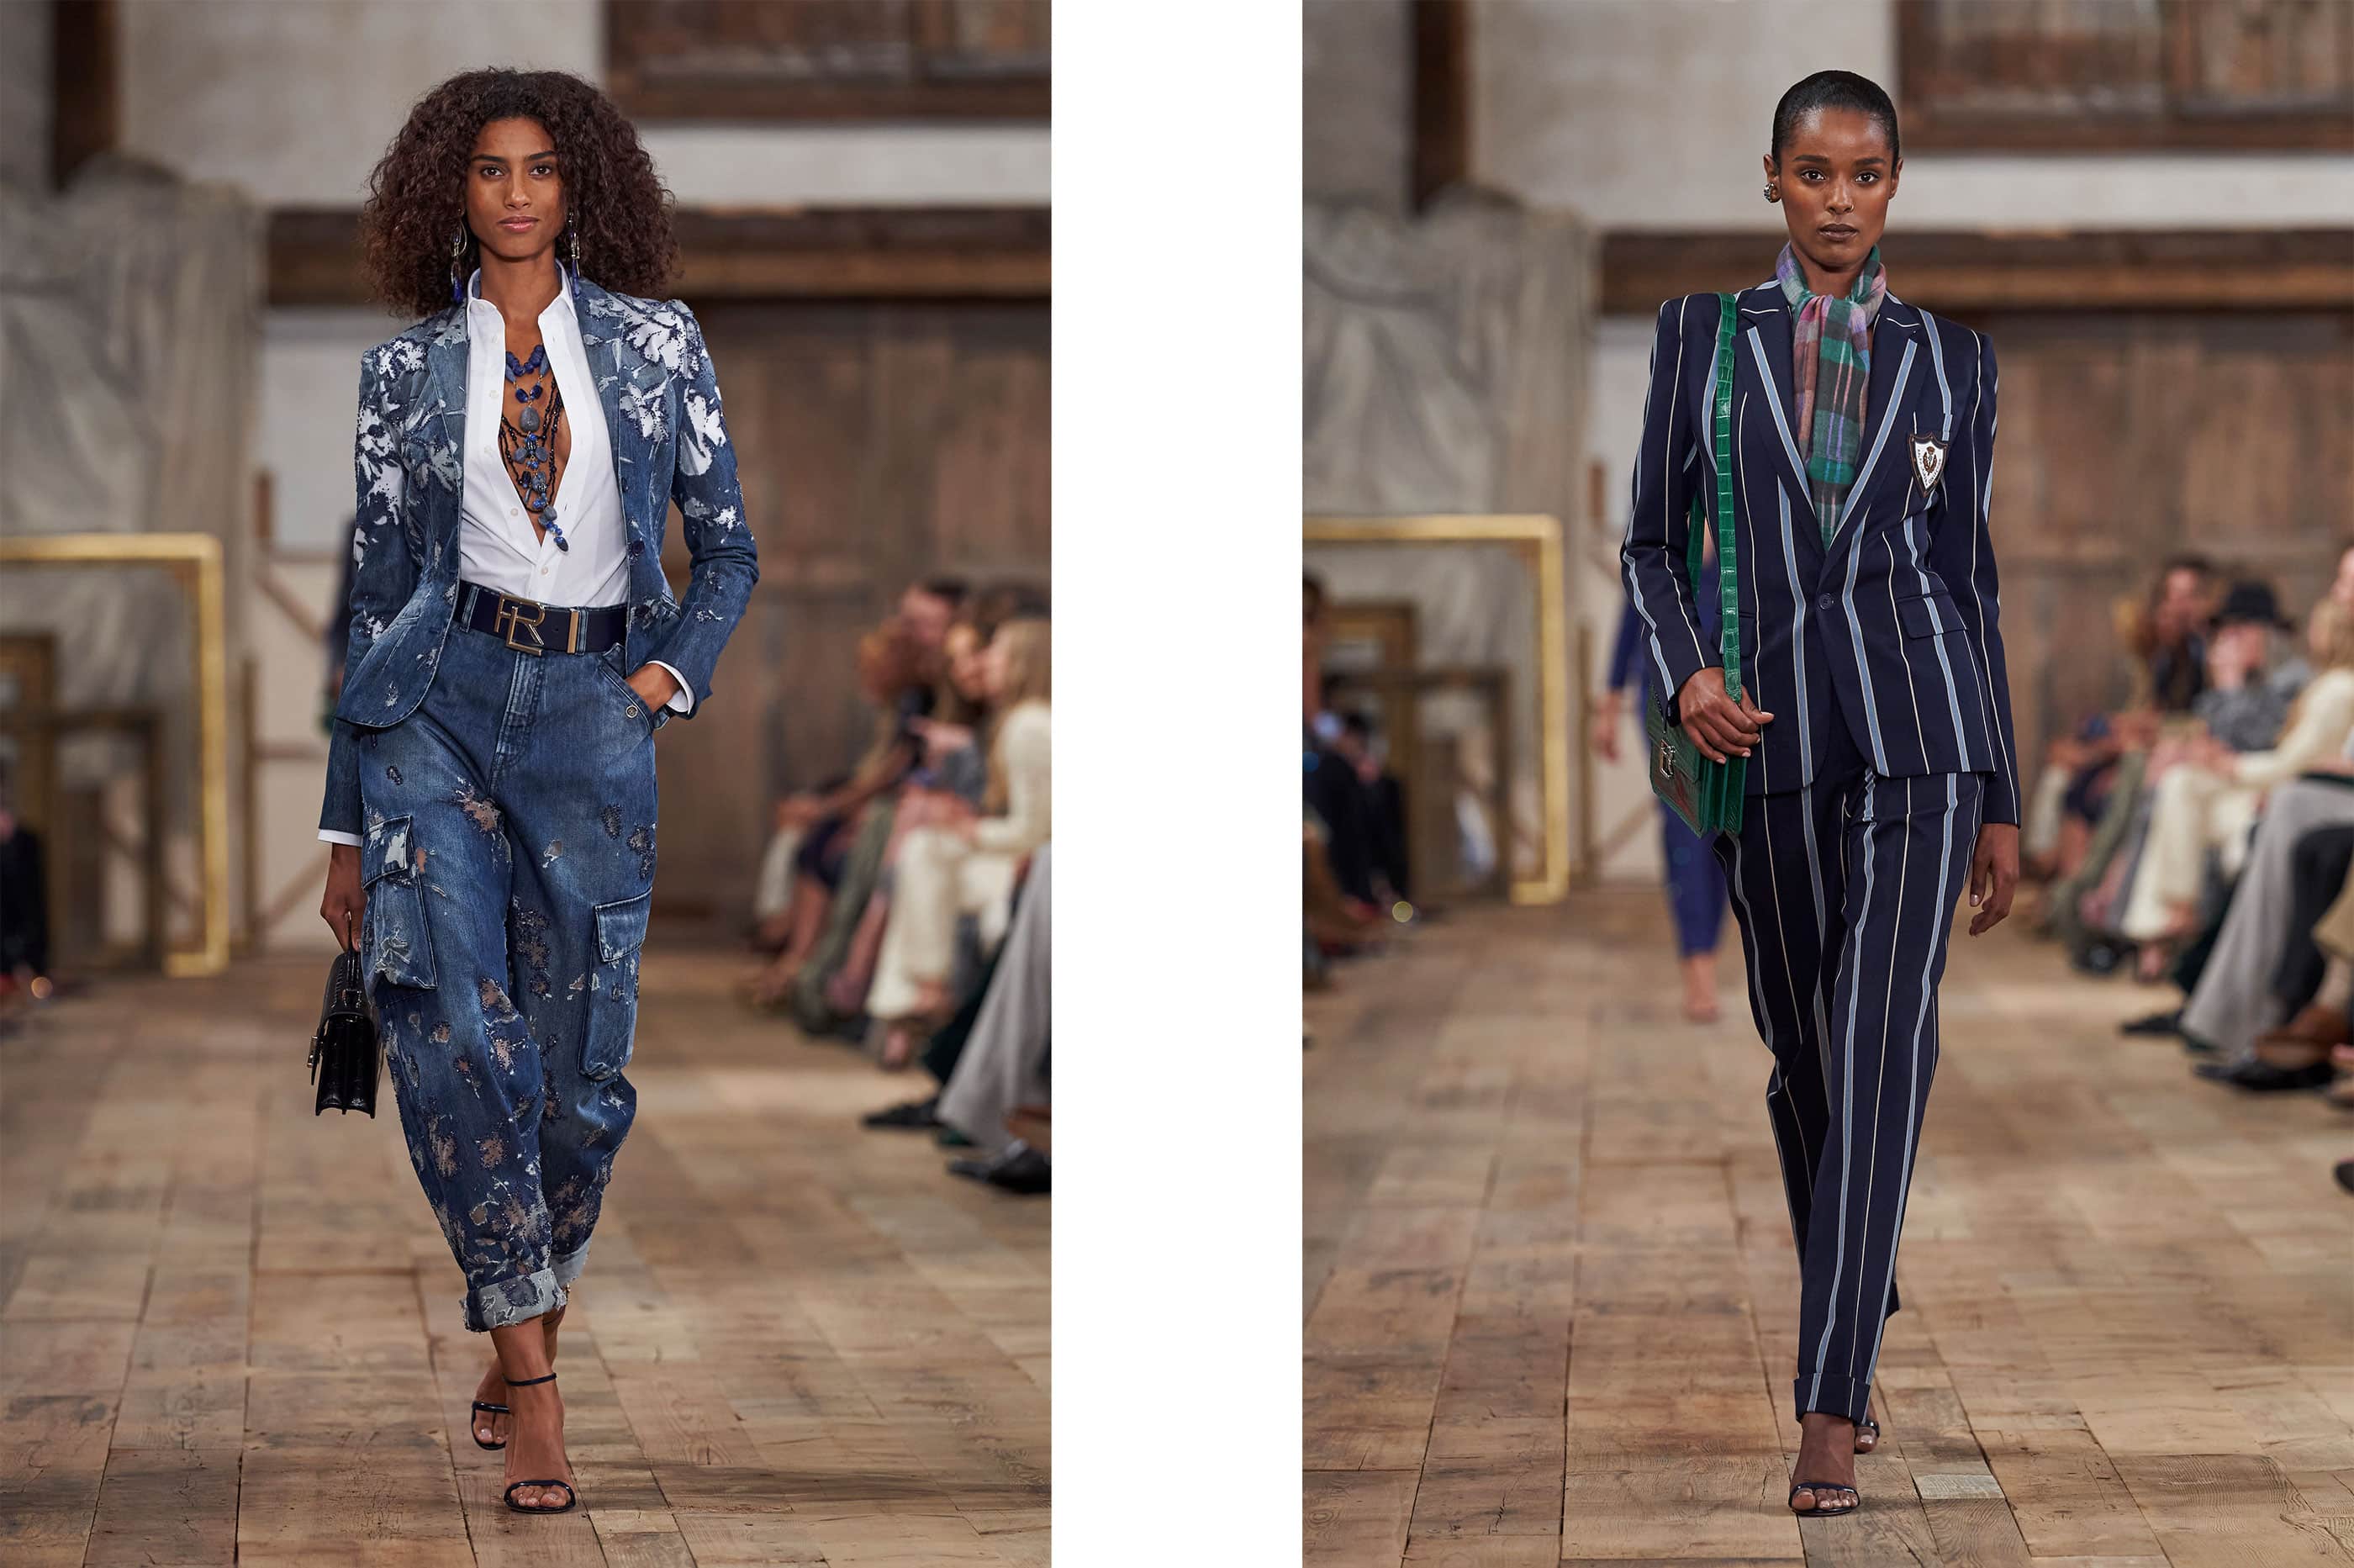 Ralph Lauren is returning to New York Fashion Week